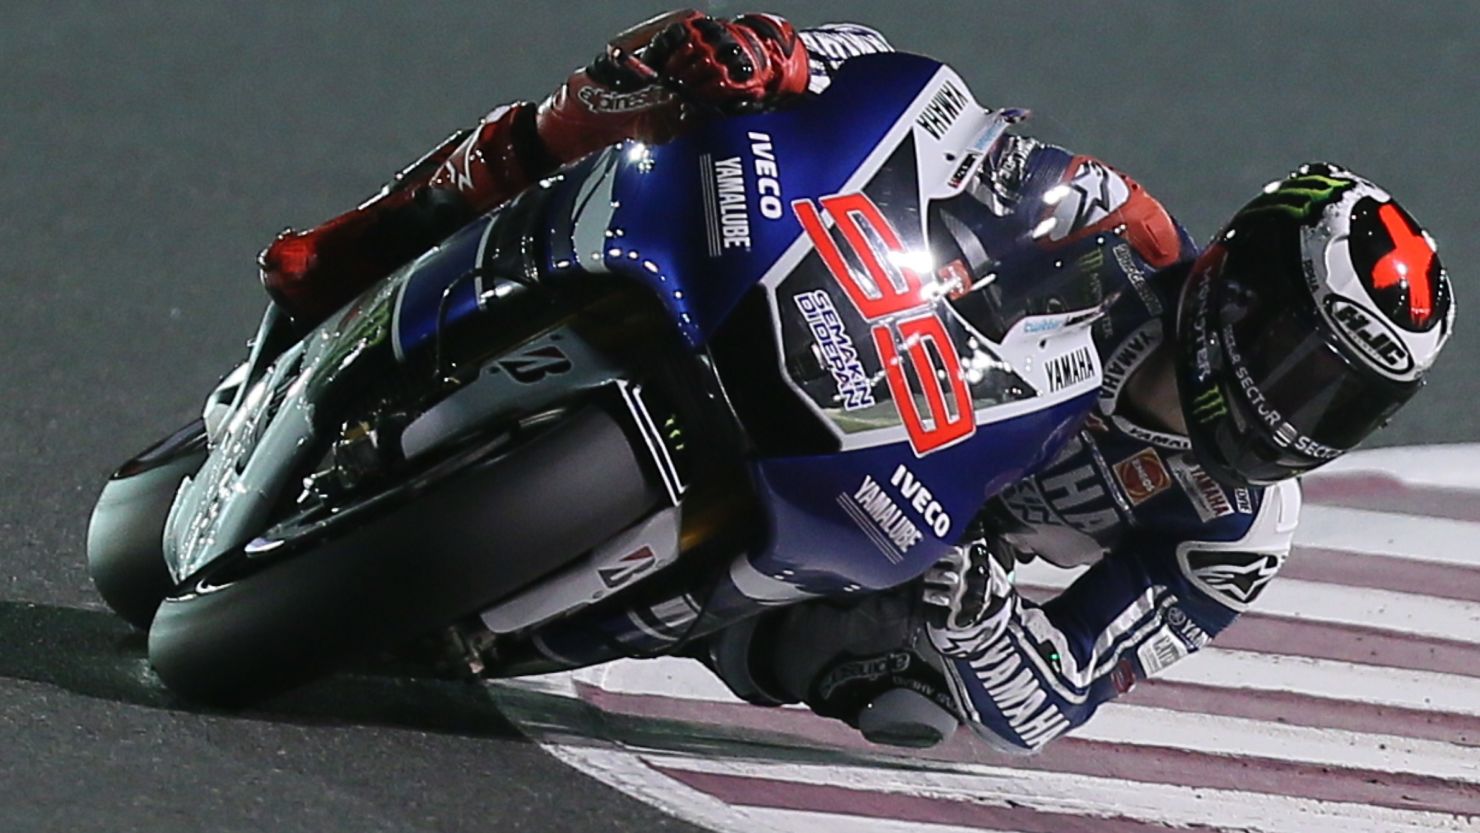 Yamaha's Jorge Lorenzo is seeking to win his third MotoGP world title this season.